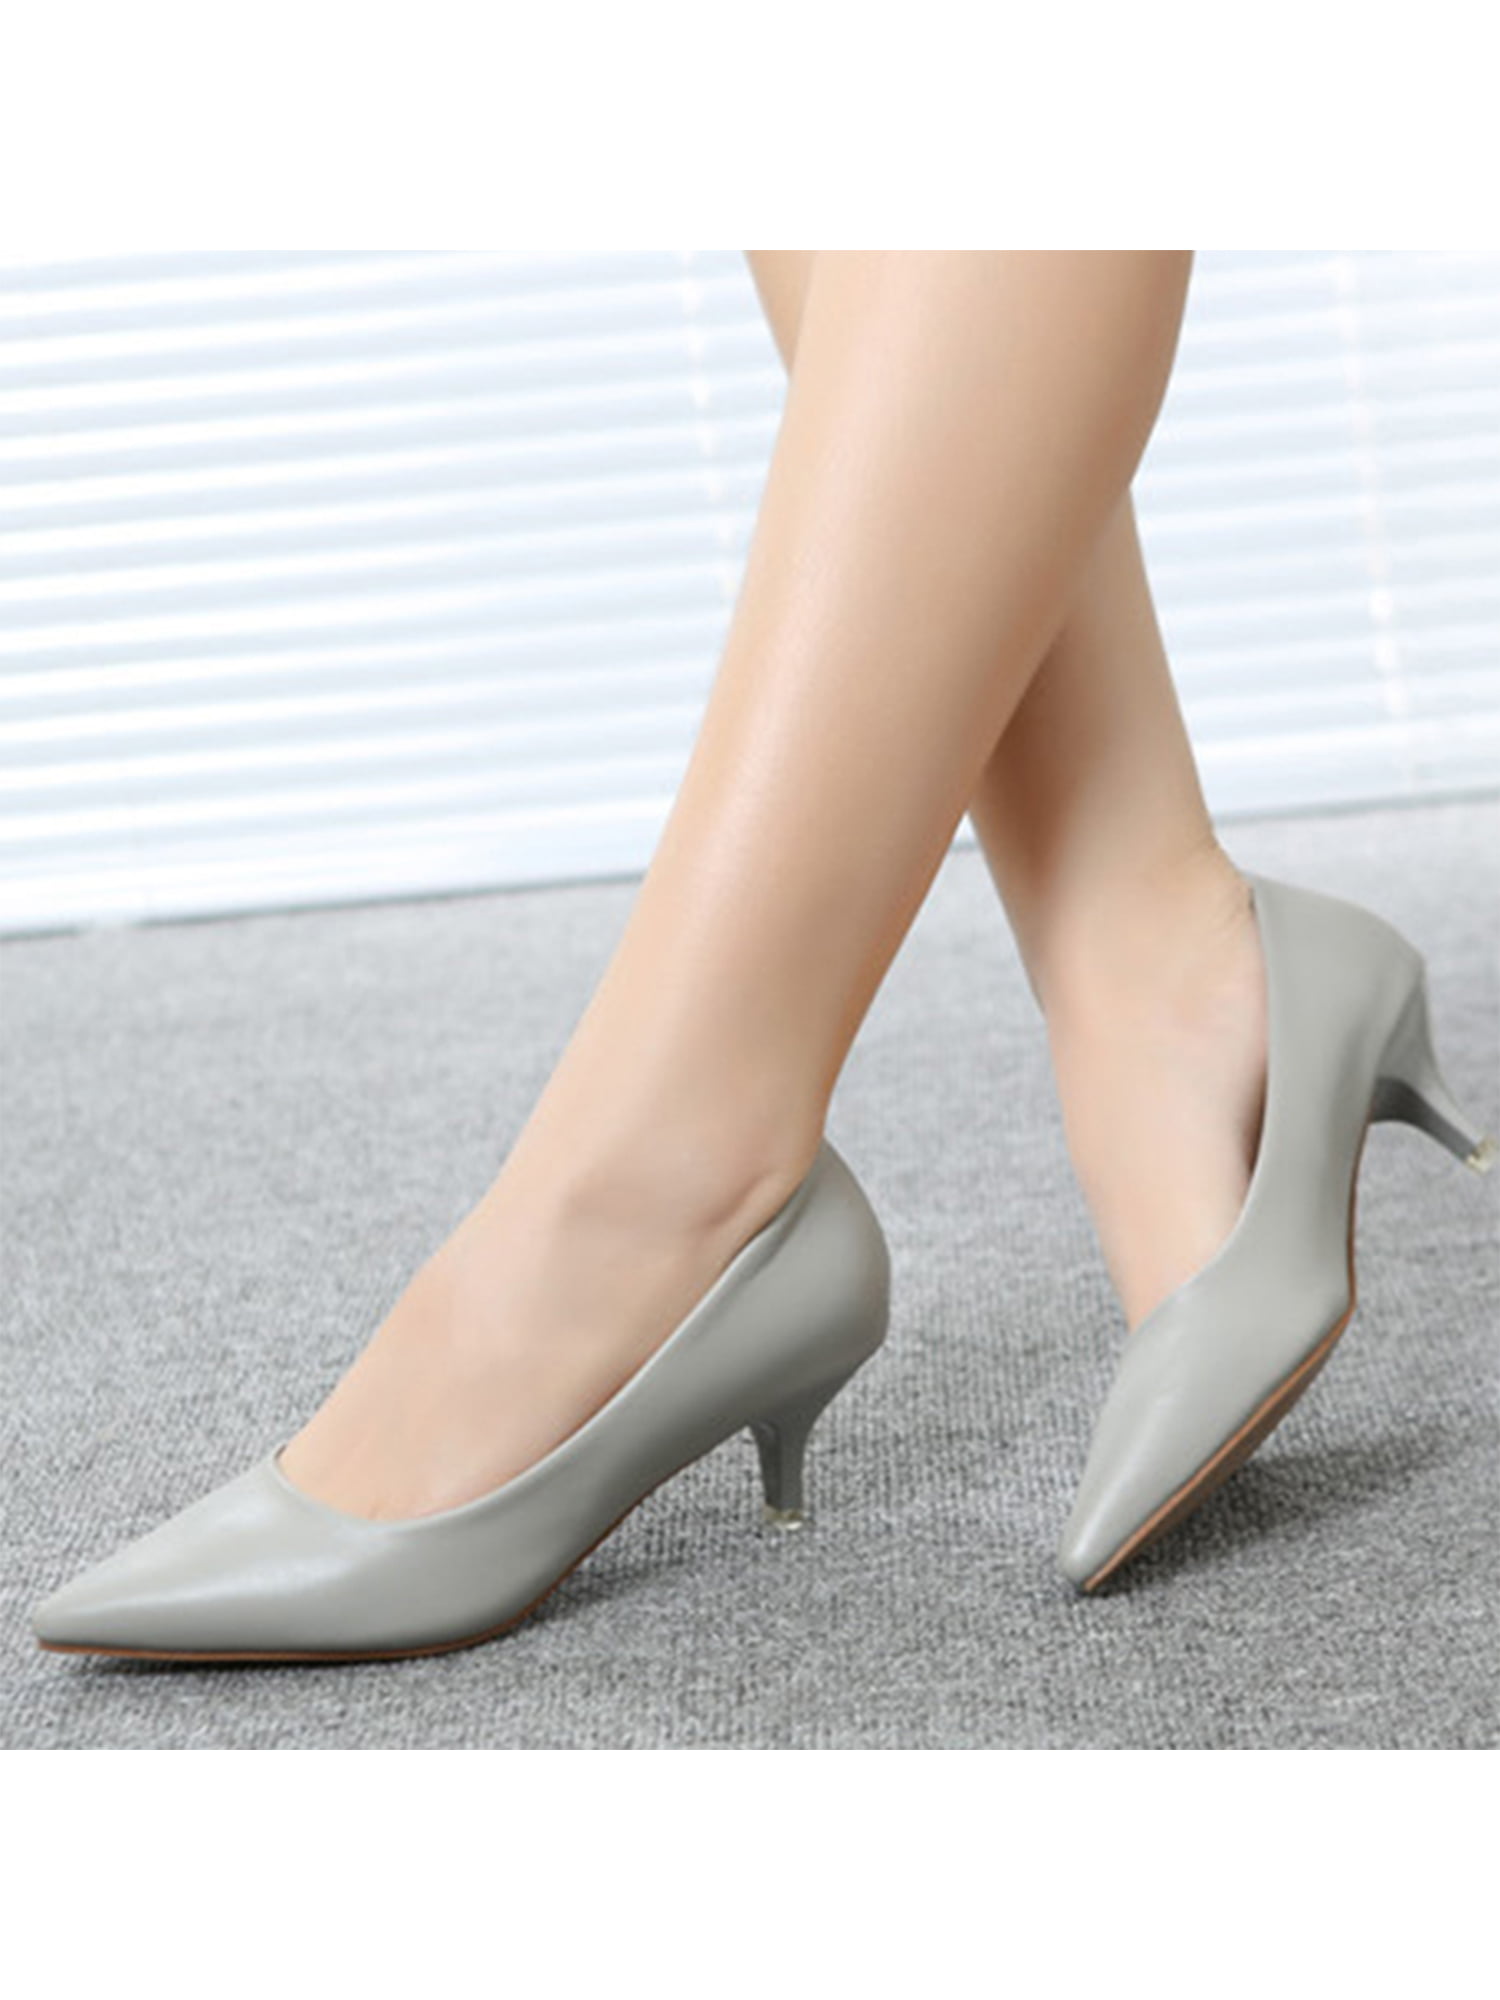 Fashionable Leather Stilettos Light grey Tamira